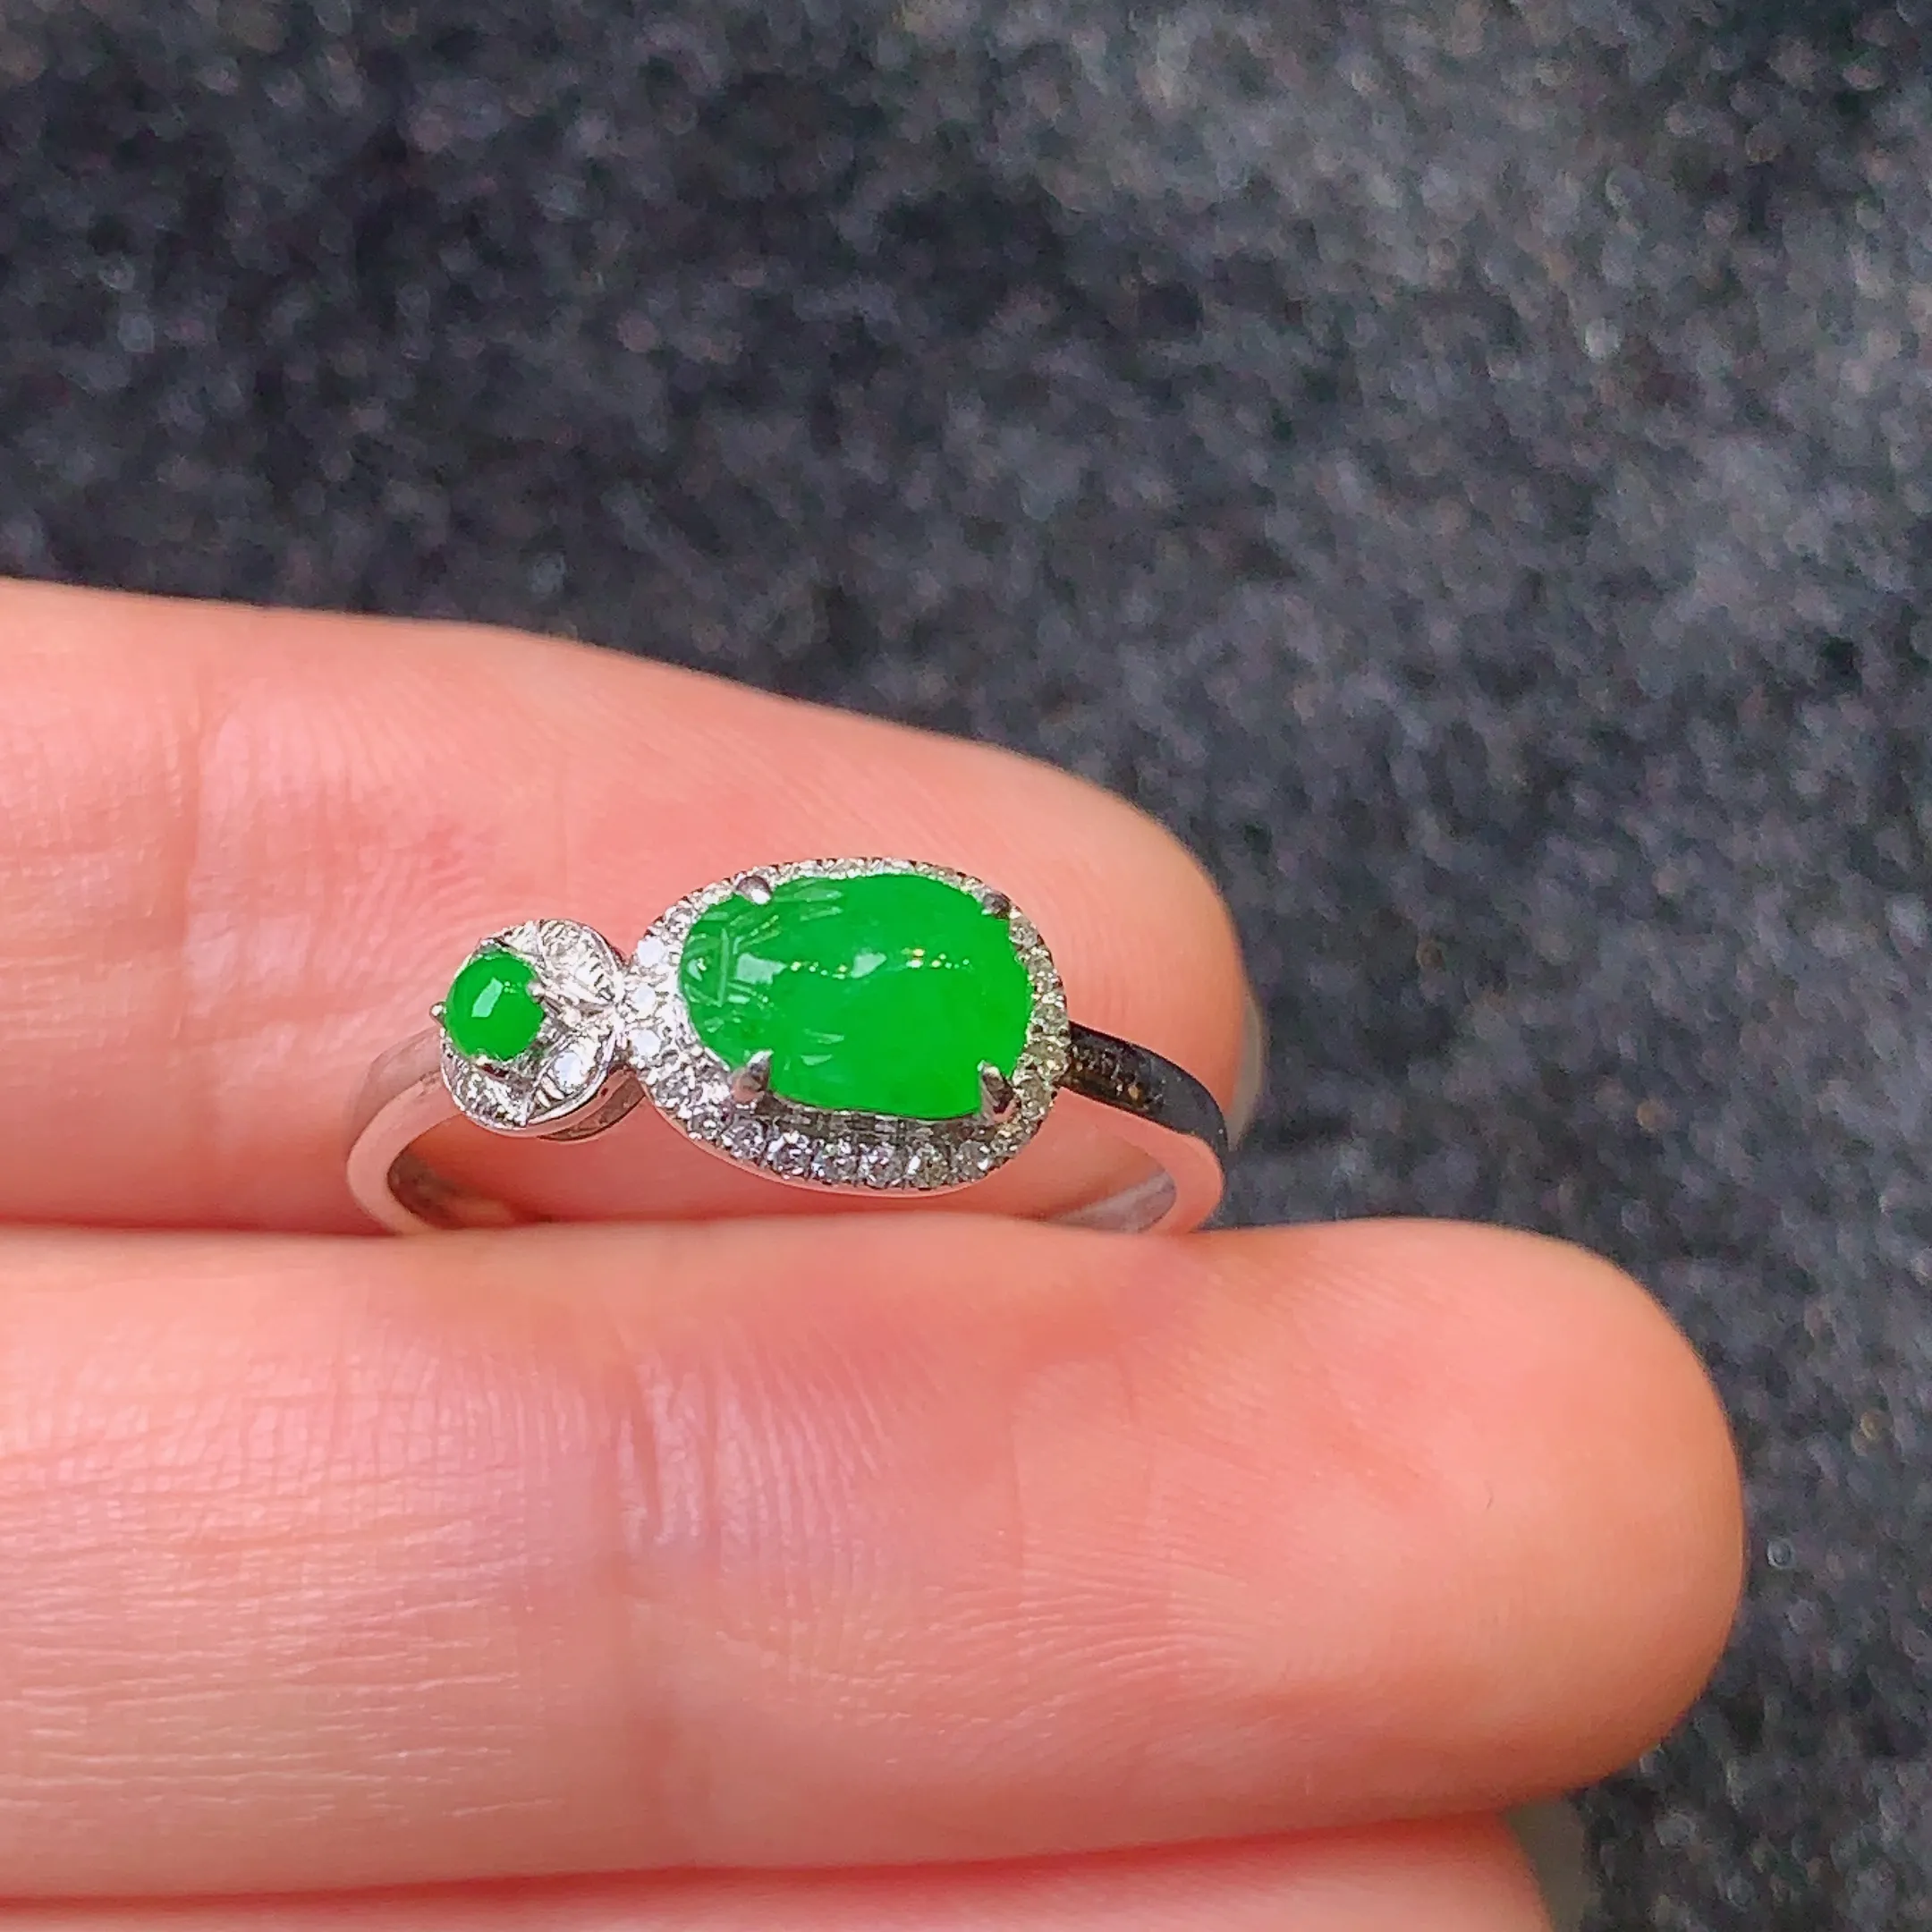 18k金钻镶嵌满绿貔貅戒指 玉质细腻 款式新颖时尚高贵优雅 圈口13.5 整体尺寸6.8*12.5*5